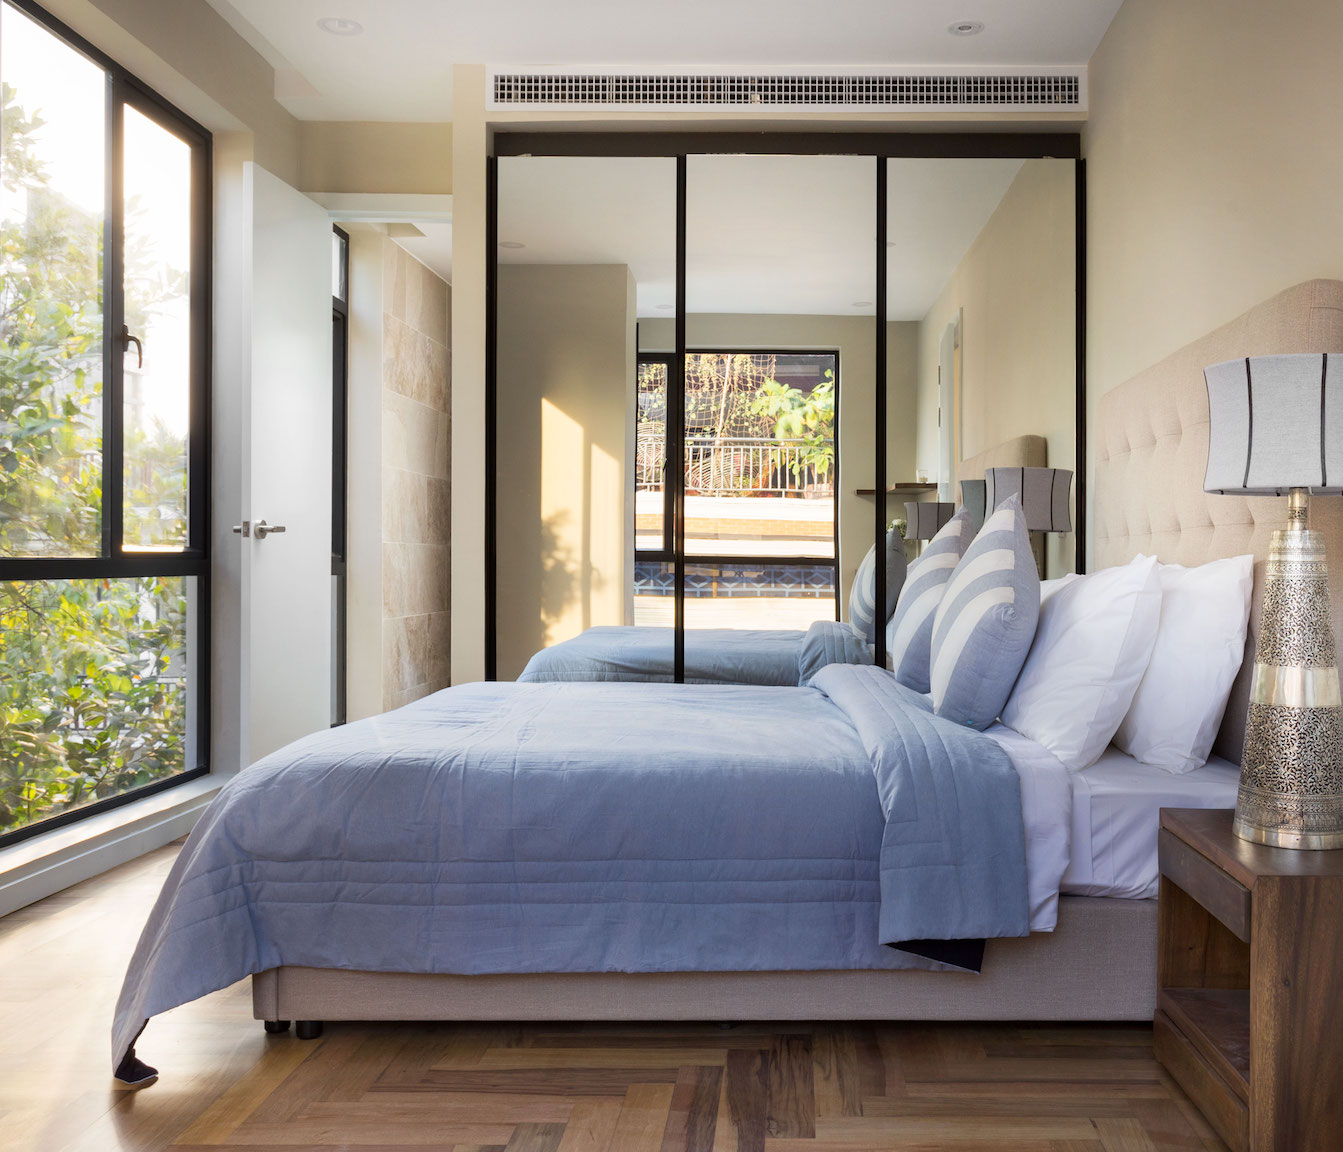 2-bedroom-master-bedroom-wardrobe-european-BKK1-condominium-cambodia-habitat-condos.jpg